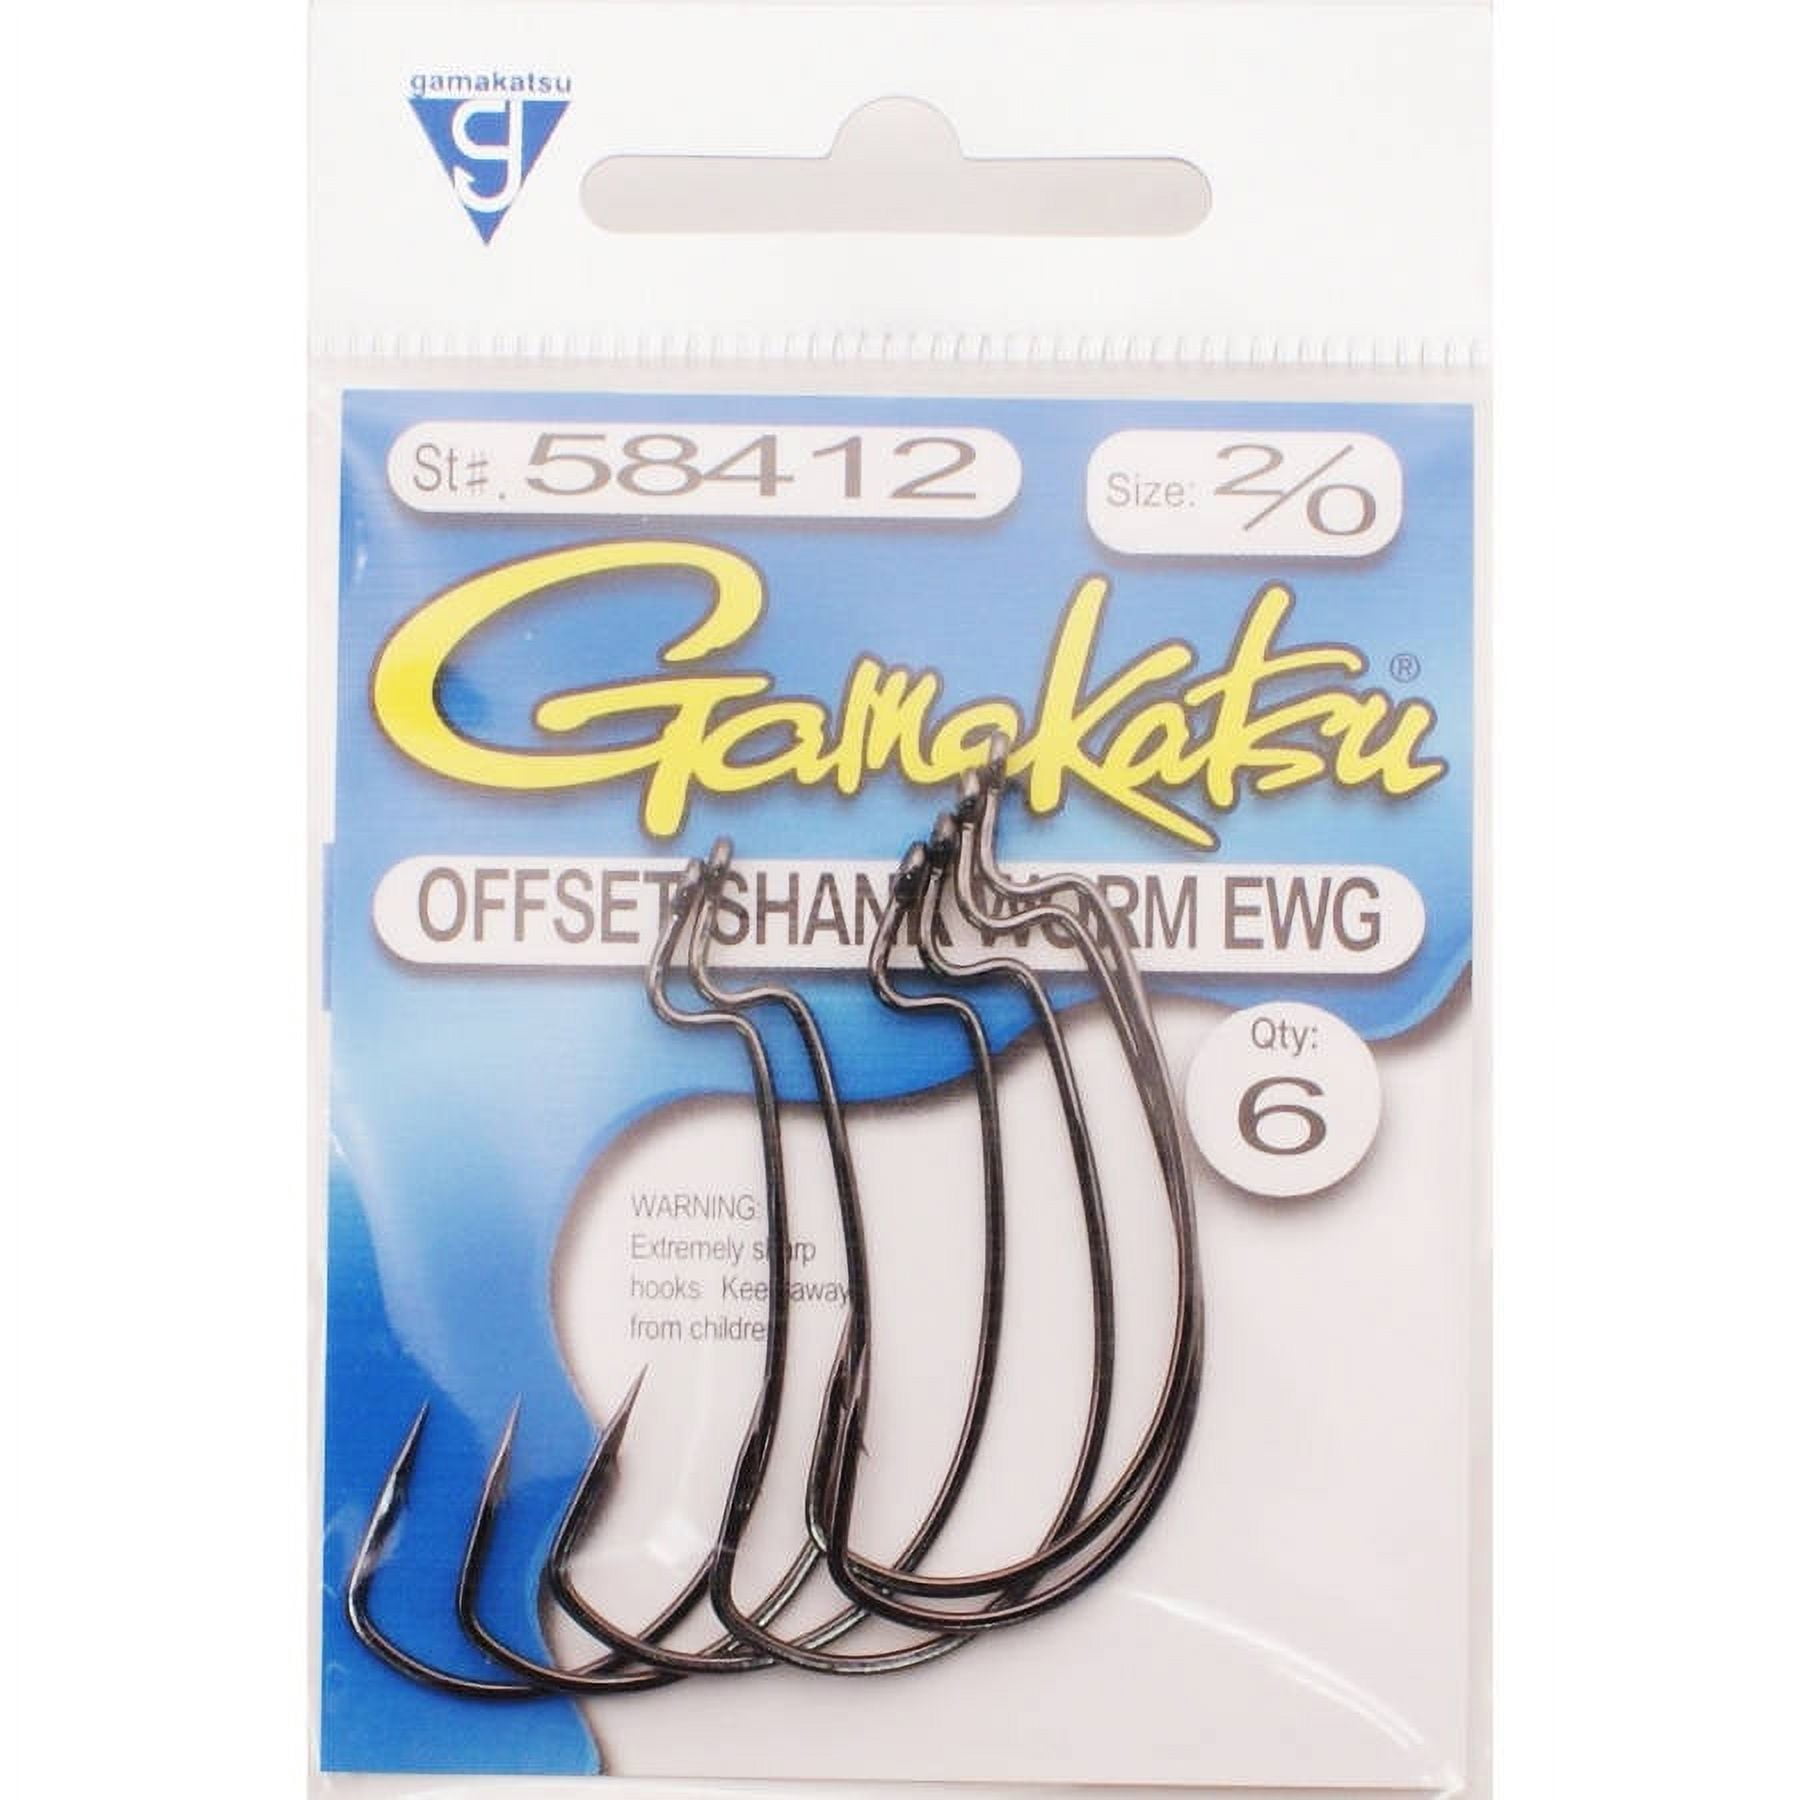 Gamakatsu 5841x Series Offset Shank EWG Worm Hooks (Black) 25